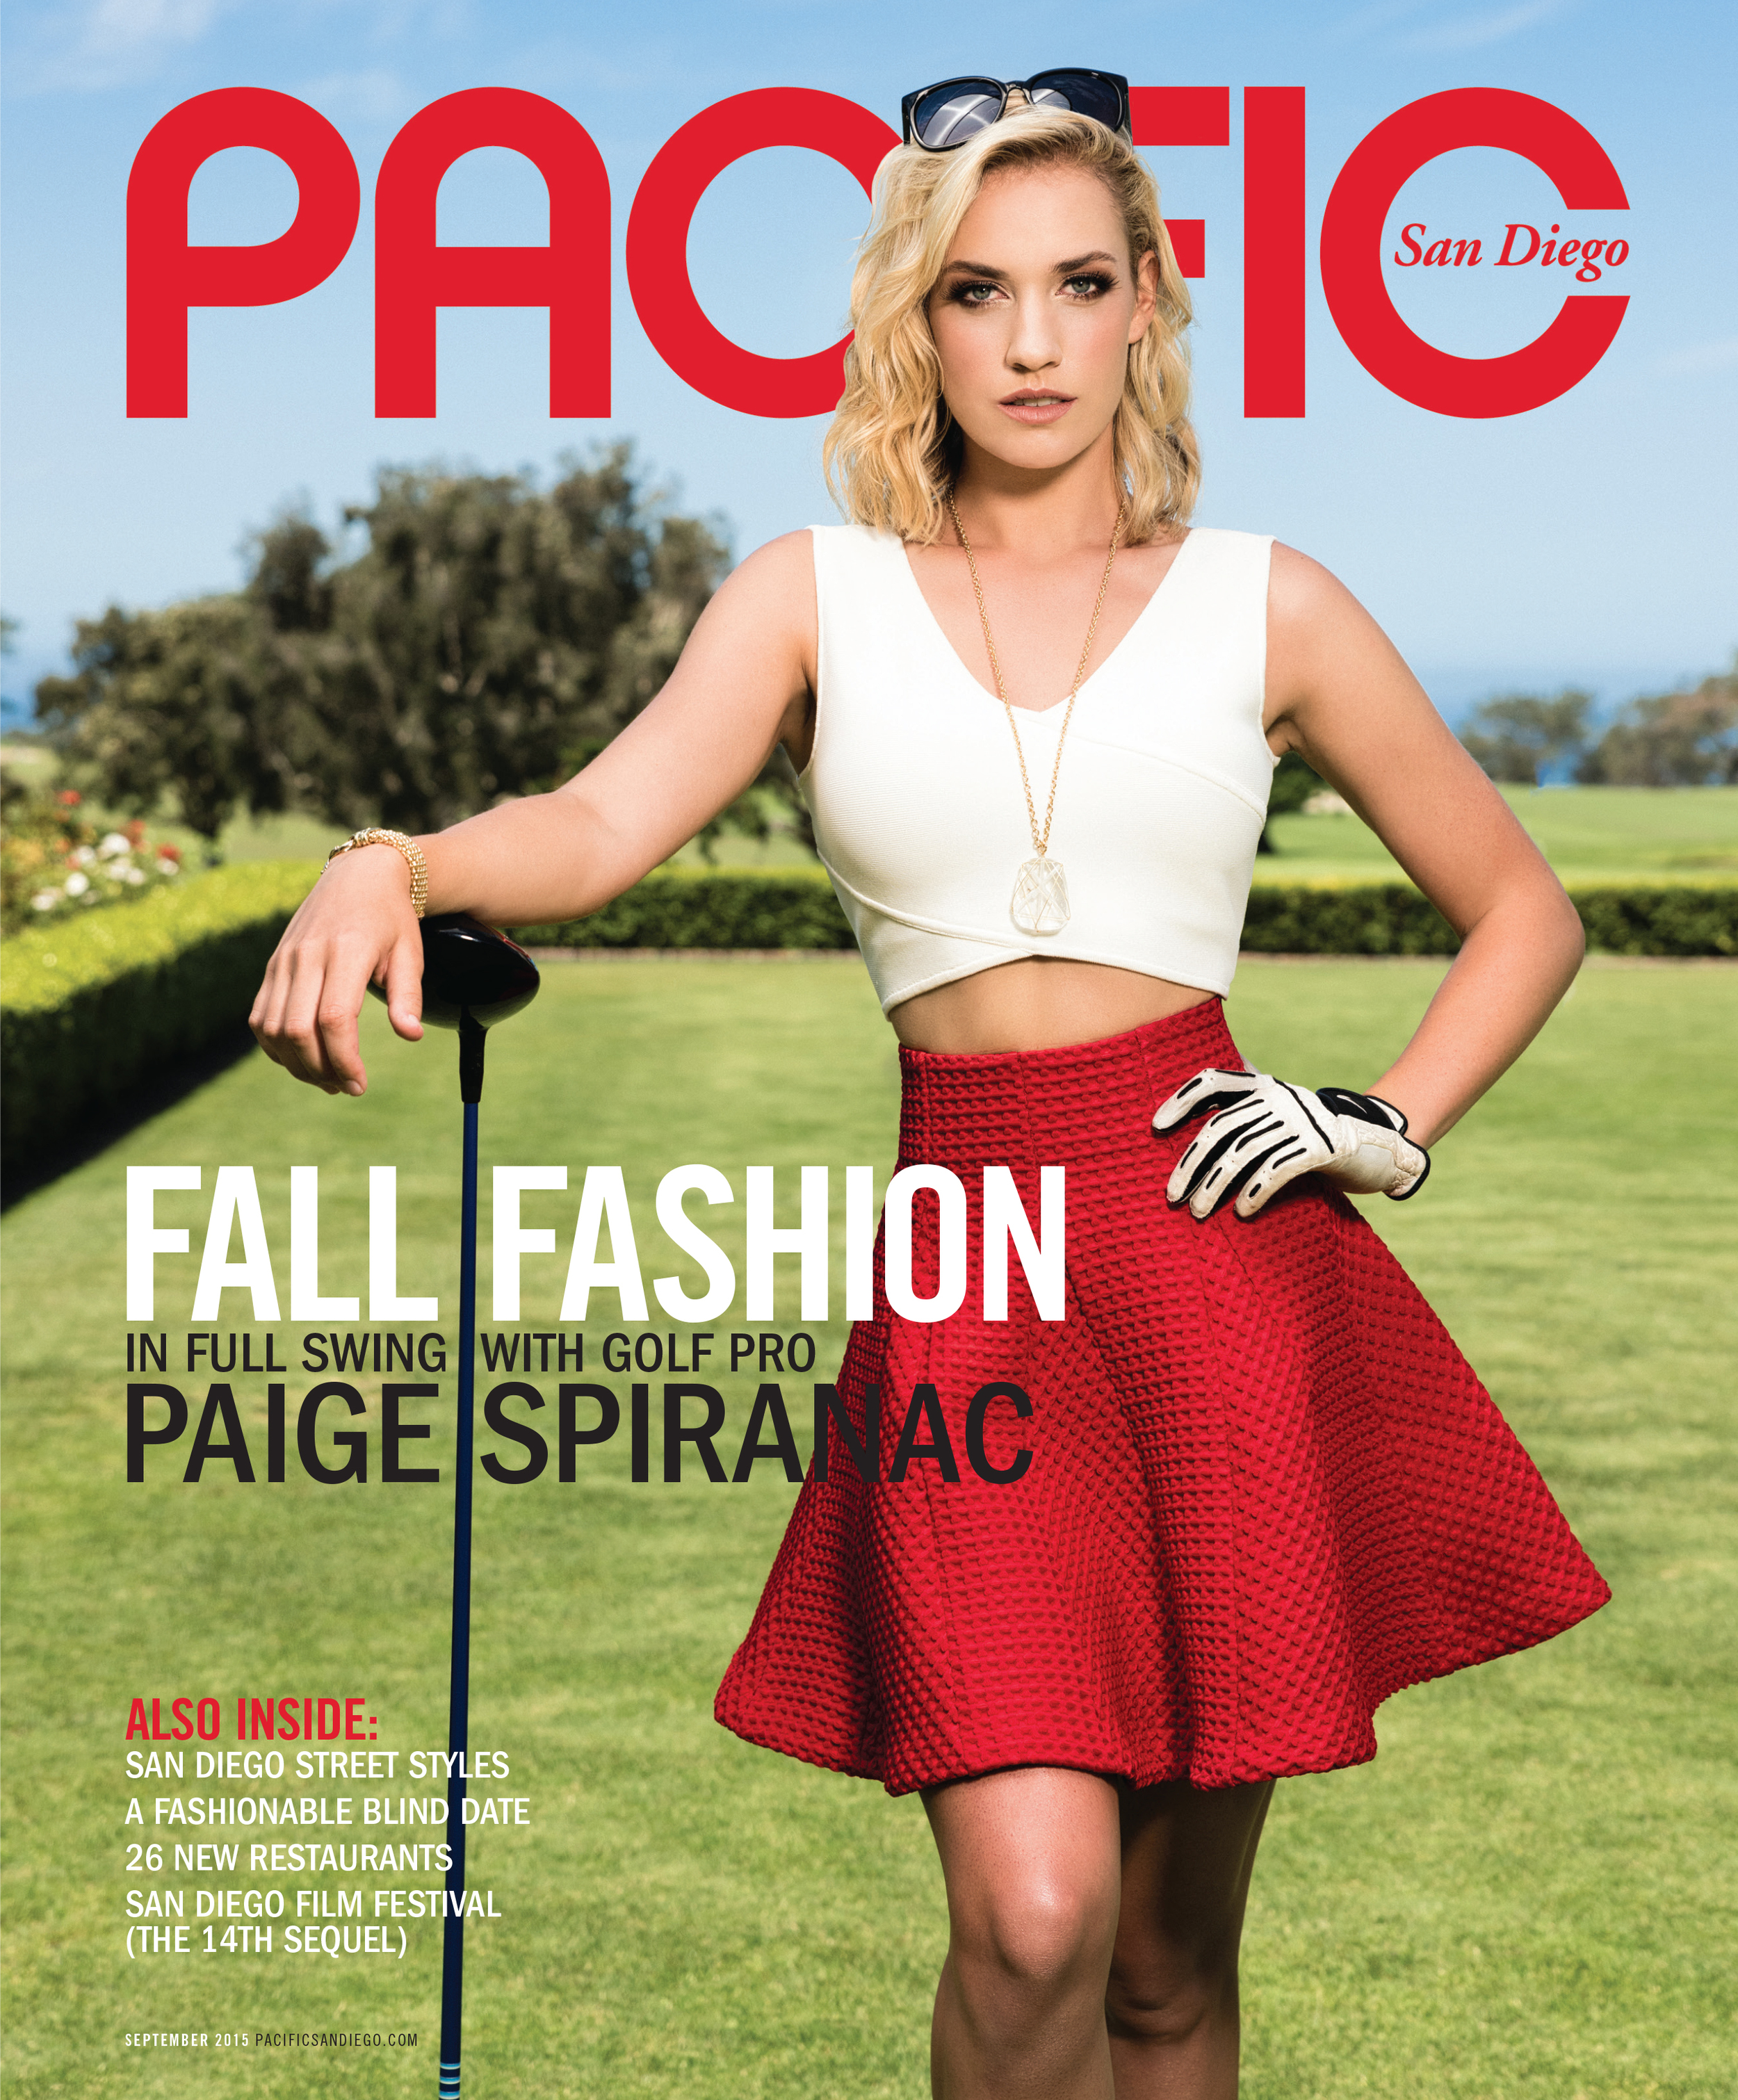 201509 Pacific San Diego Magazine September Cover.jpg